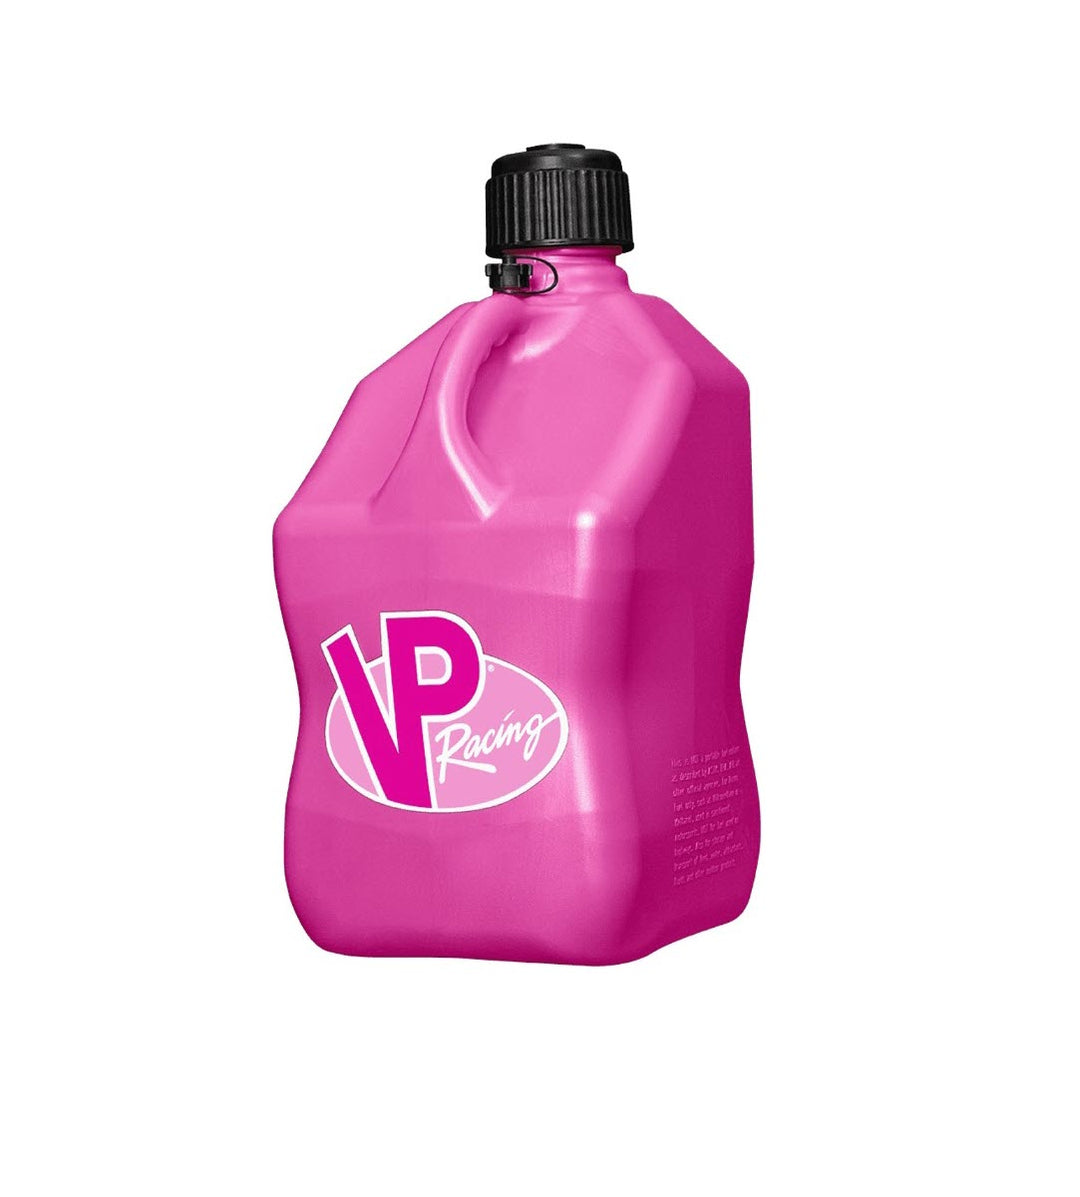 VP Racing 5.5-Gallon Motorsport Container - Pink Jug, Black Cap